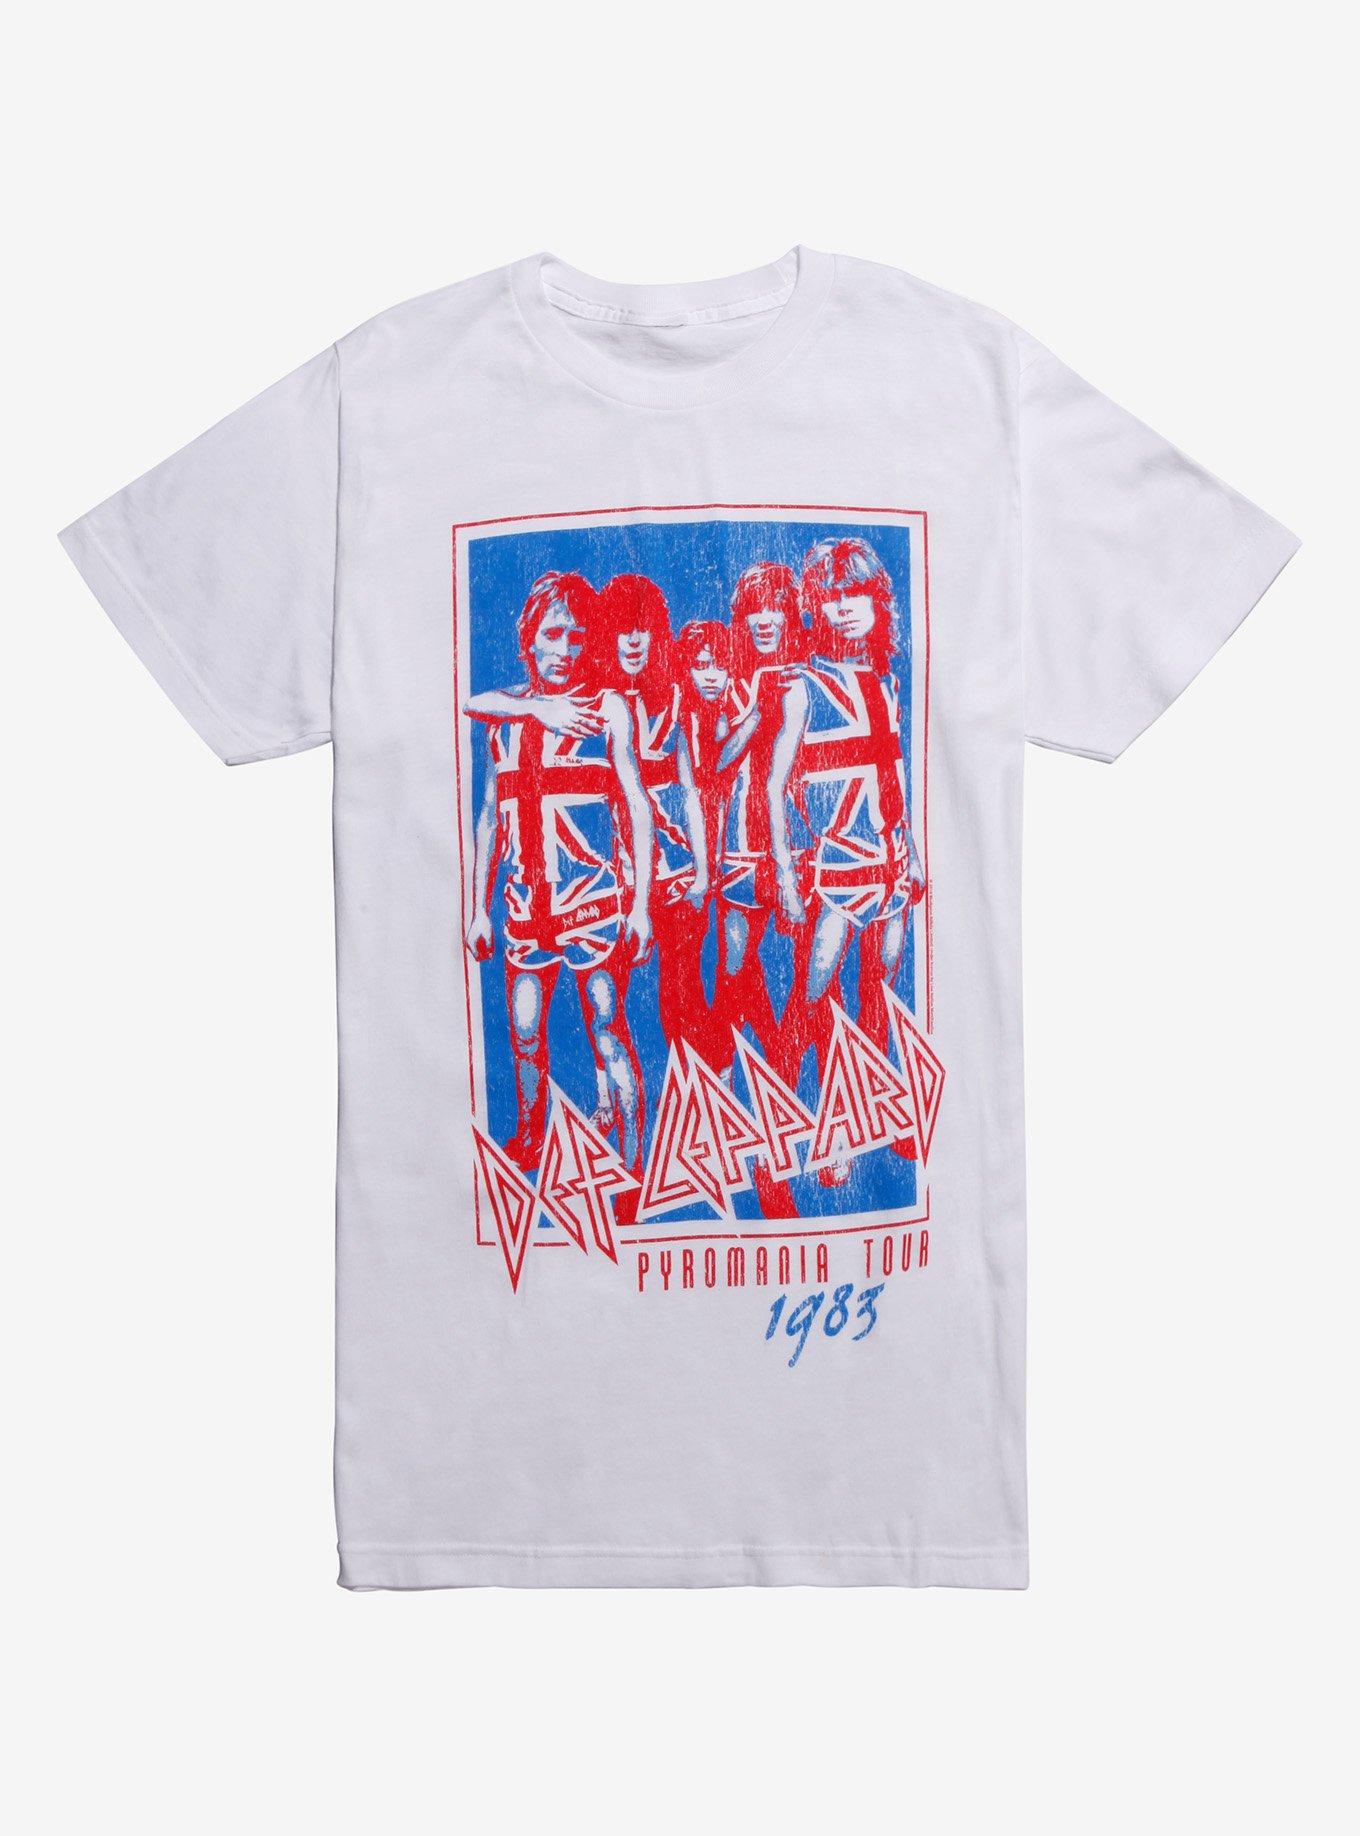 Def Leppard Pyromania Tour 1983 T-Shirt | Hot Topic